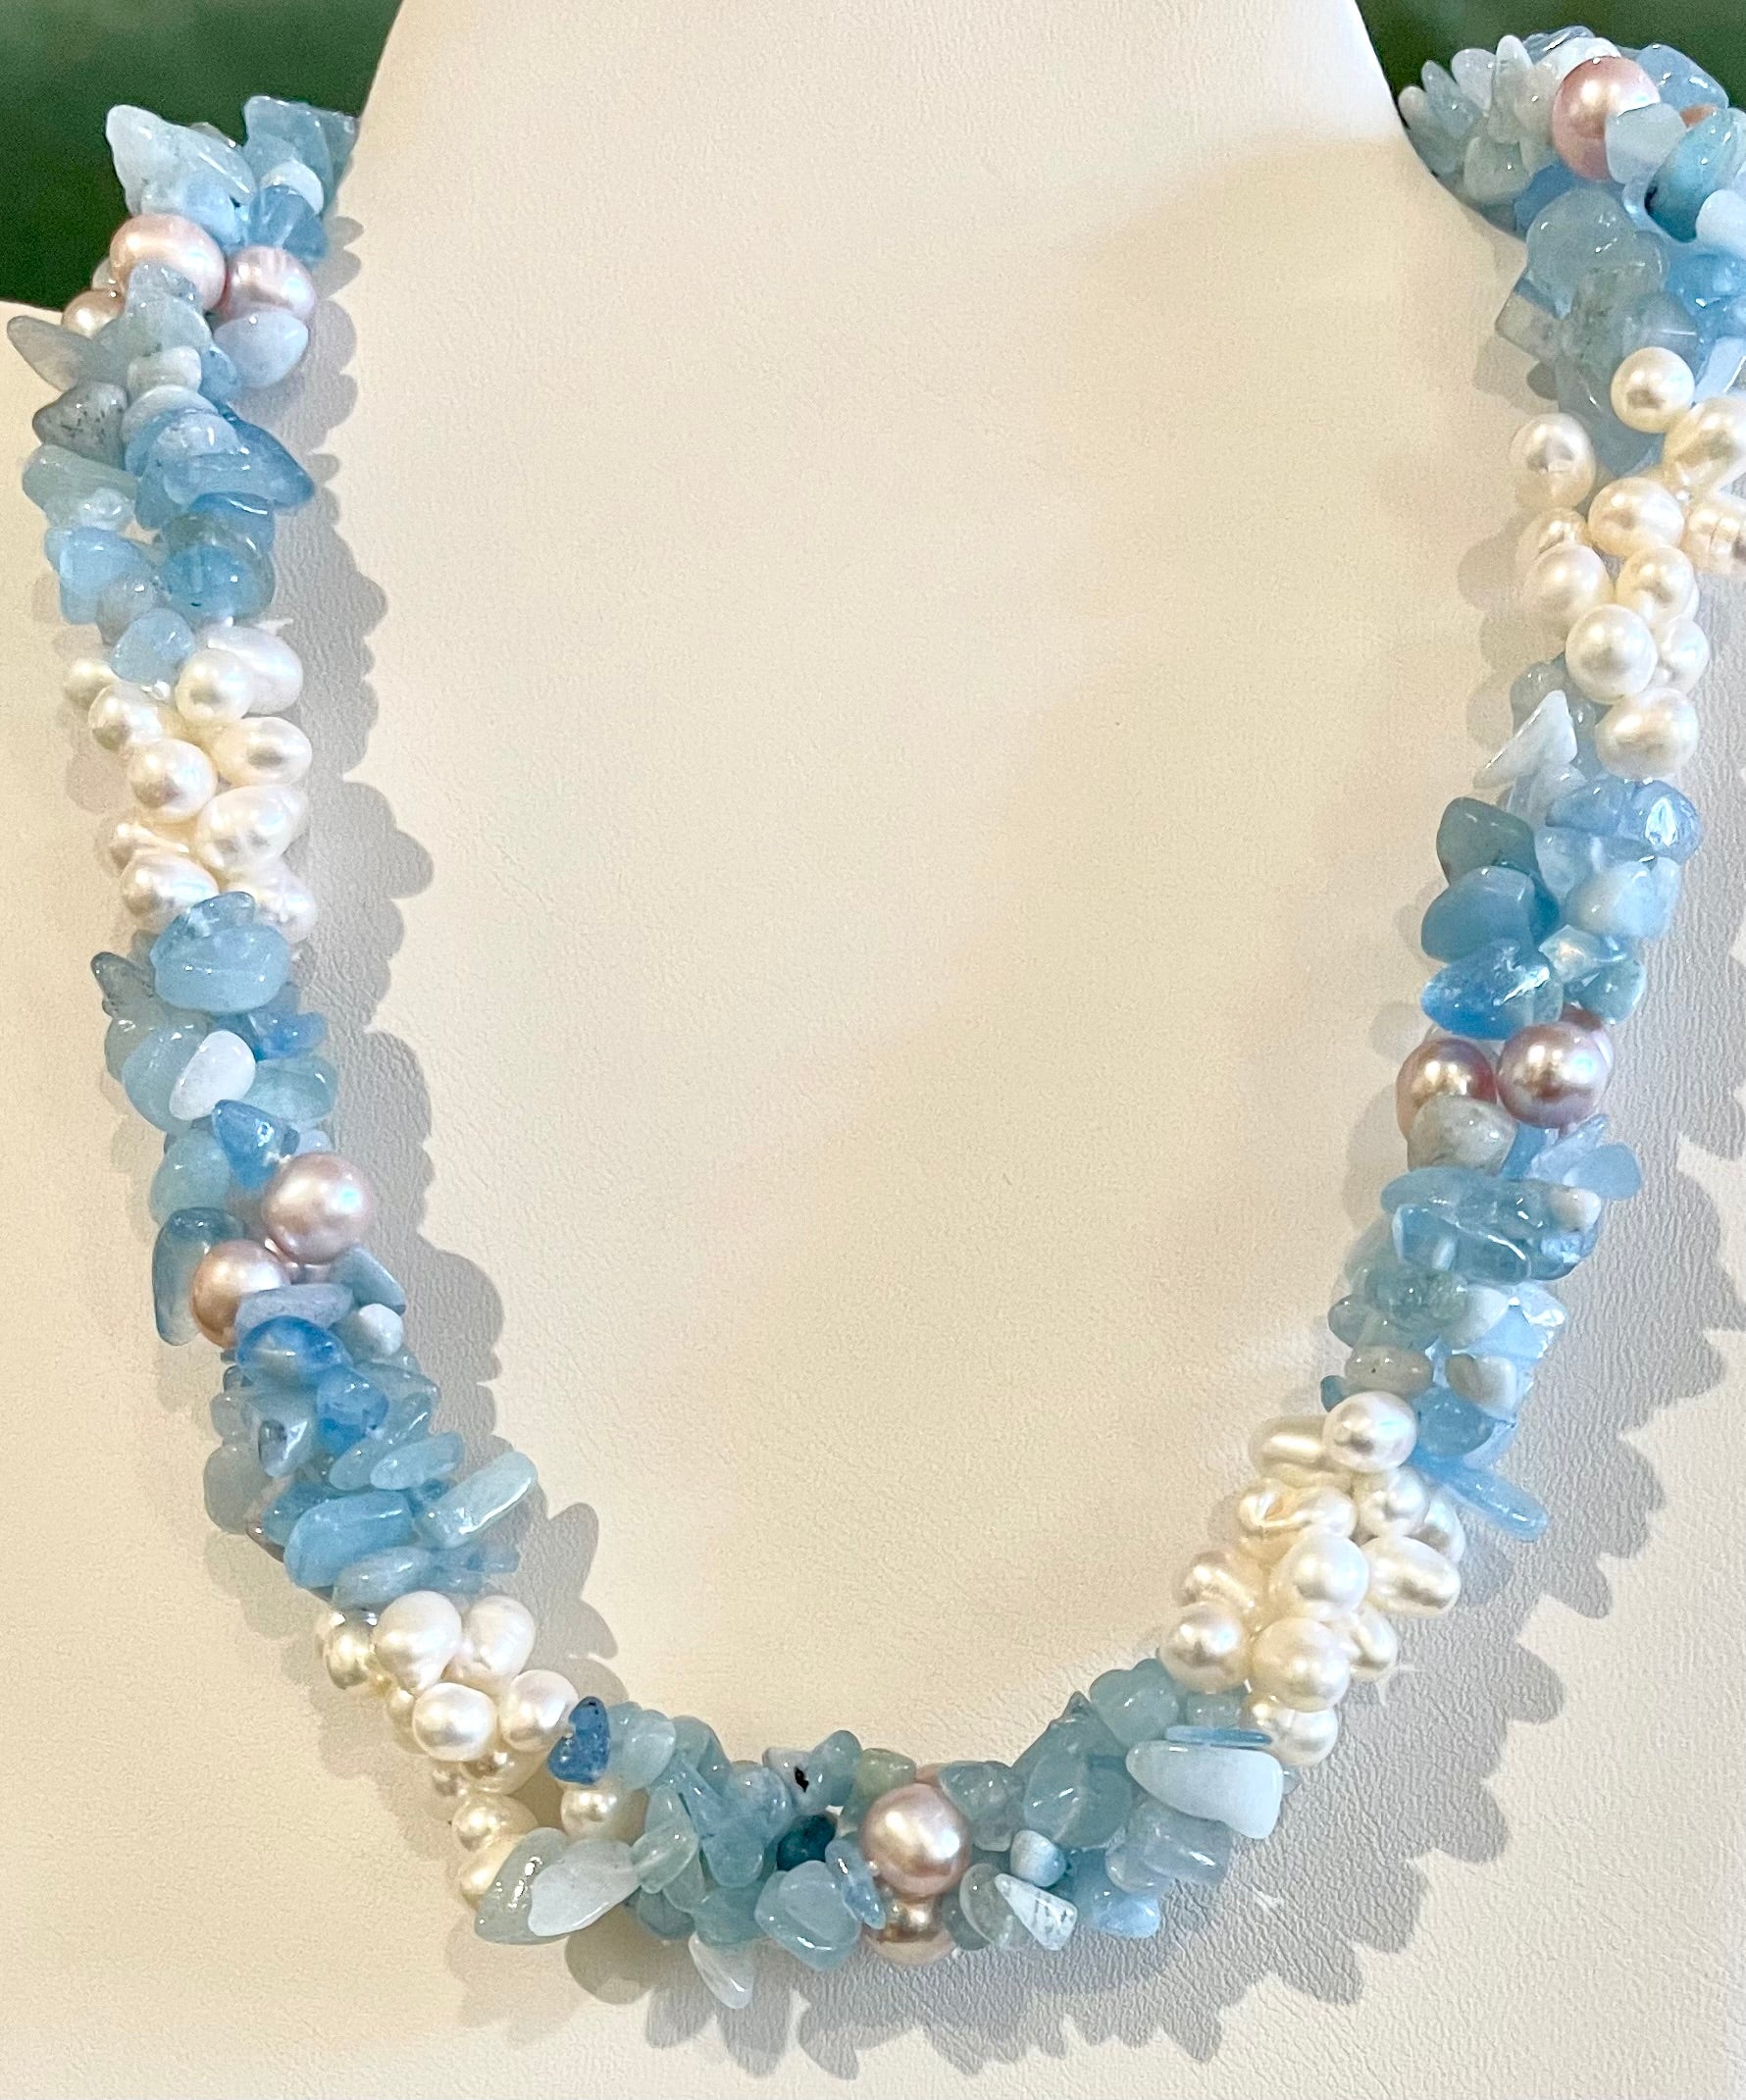 Beautiful Blue Bead Jewelry Ideas